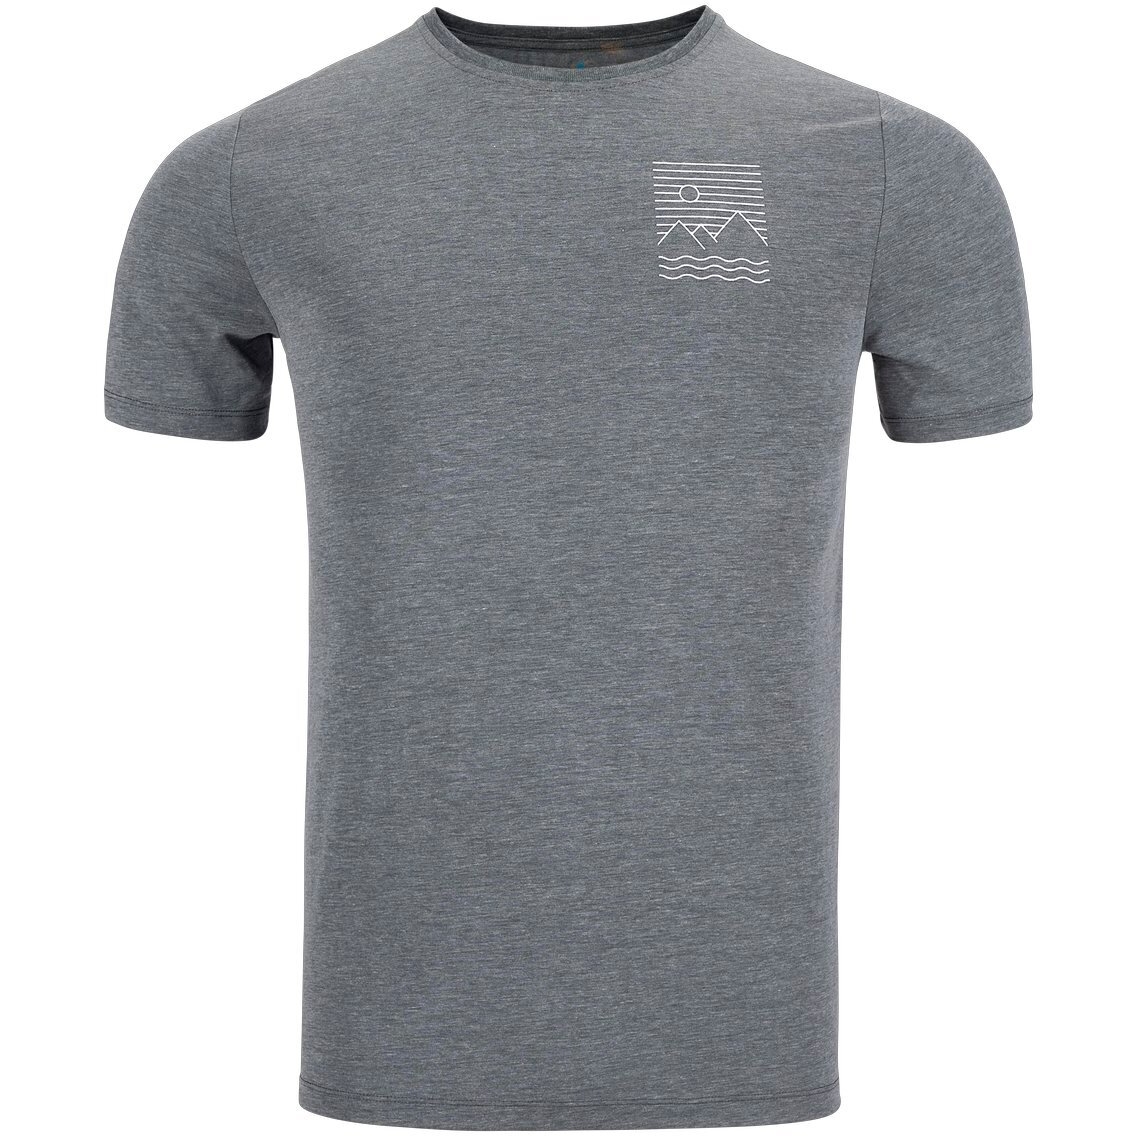 Produktbild von Odlo Ascent 365 T-Shirt mit linearem Landschaftsprint Herren - black melange